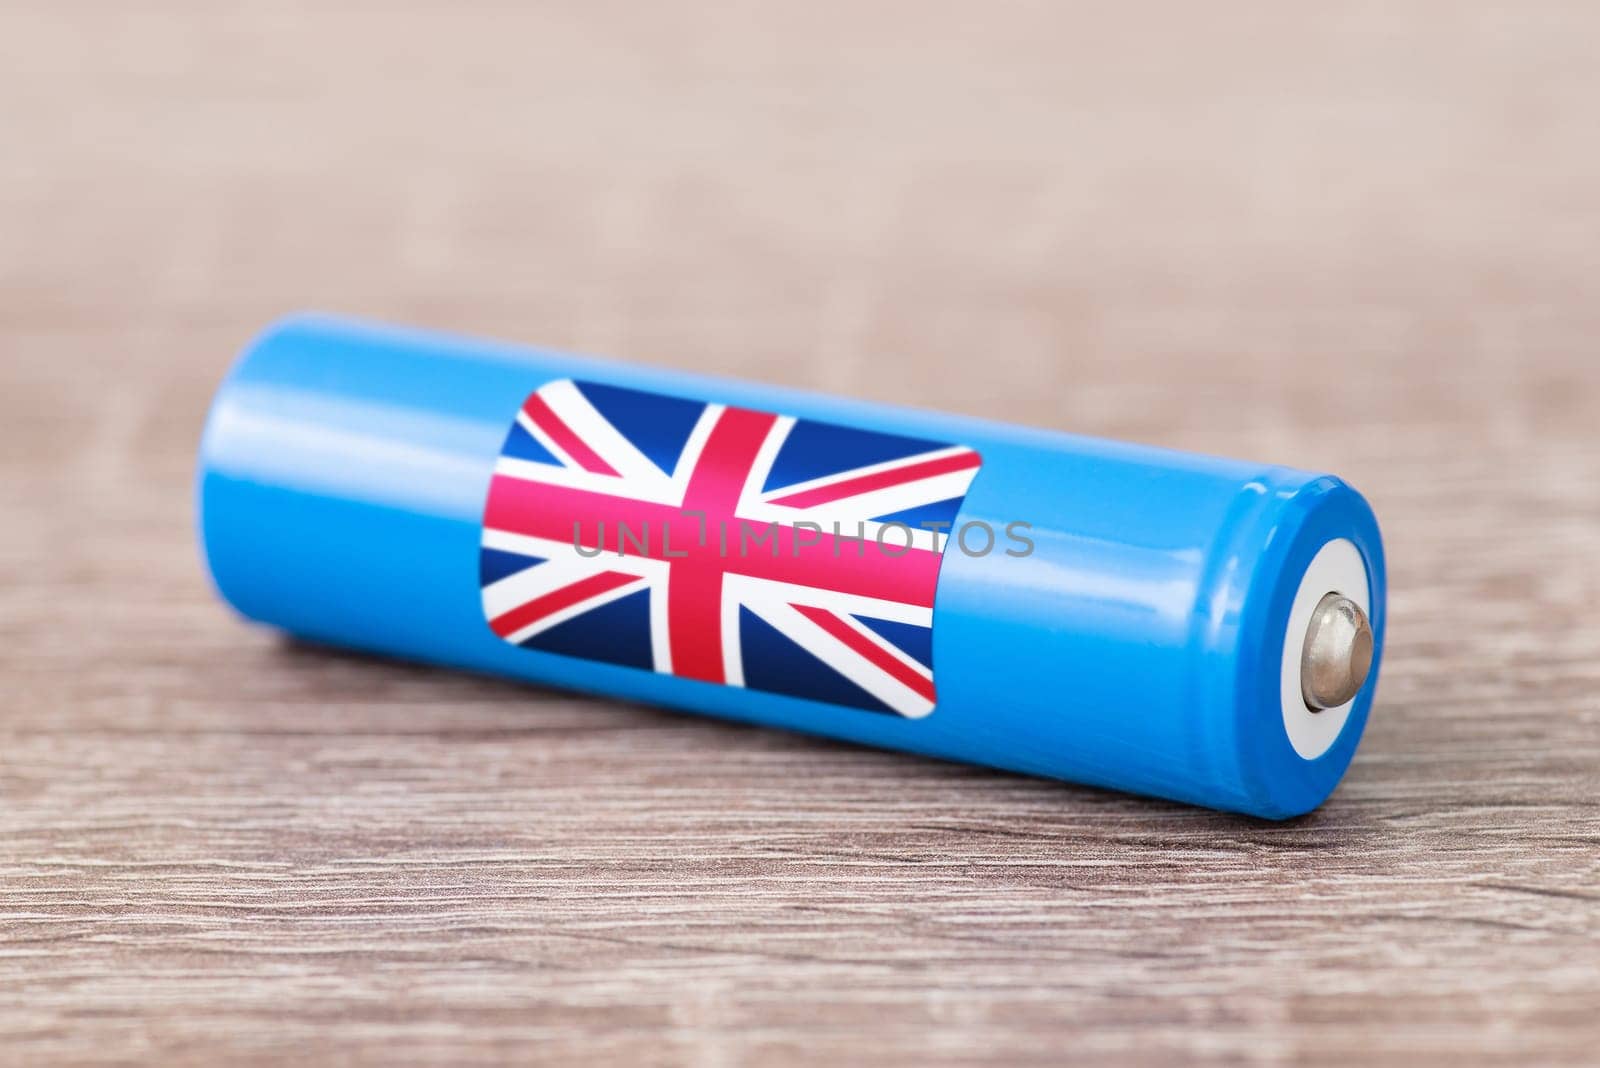 Rechargeable li-ion battery with flag of UK by VitaliiPetrushenko